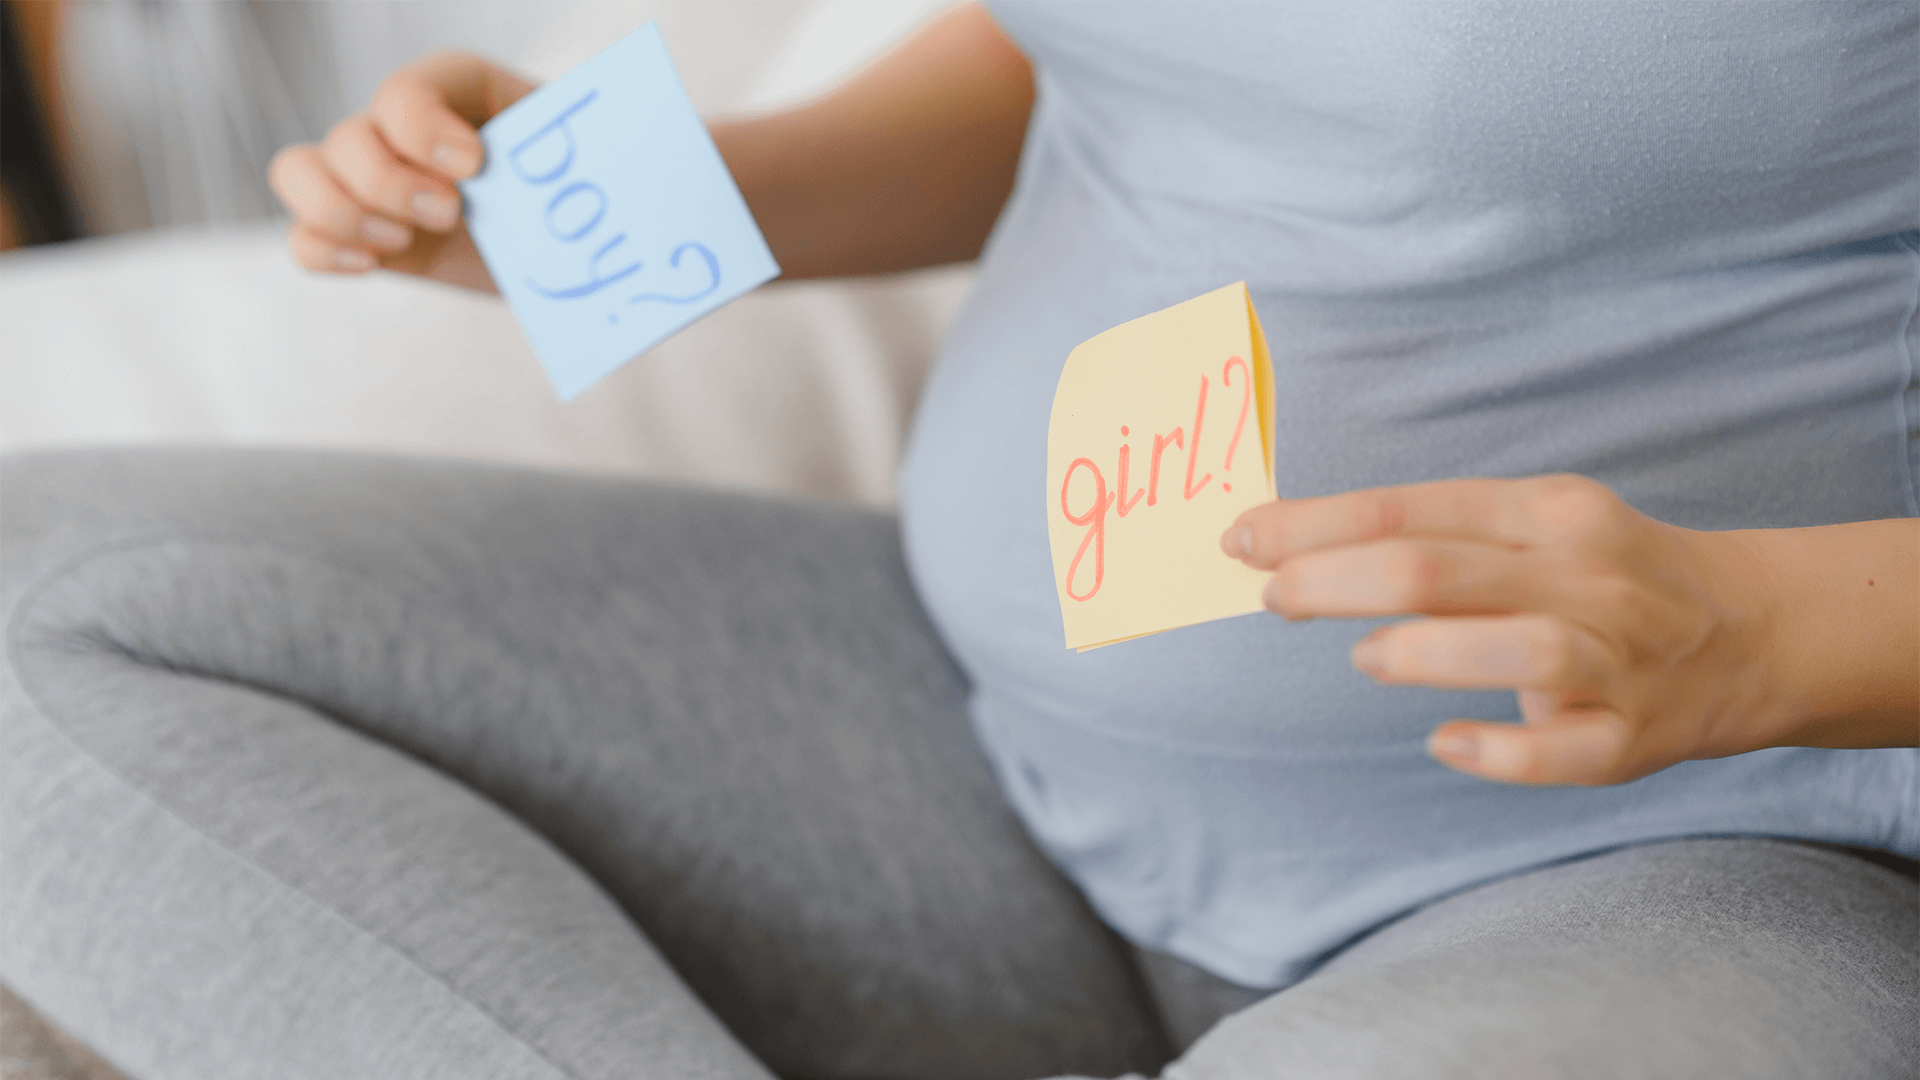 Sexagem fetal: tudo sobre o exame que descobre o sexo do bebê na 8ª semana  de gravidez